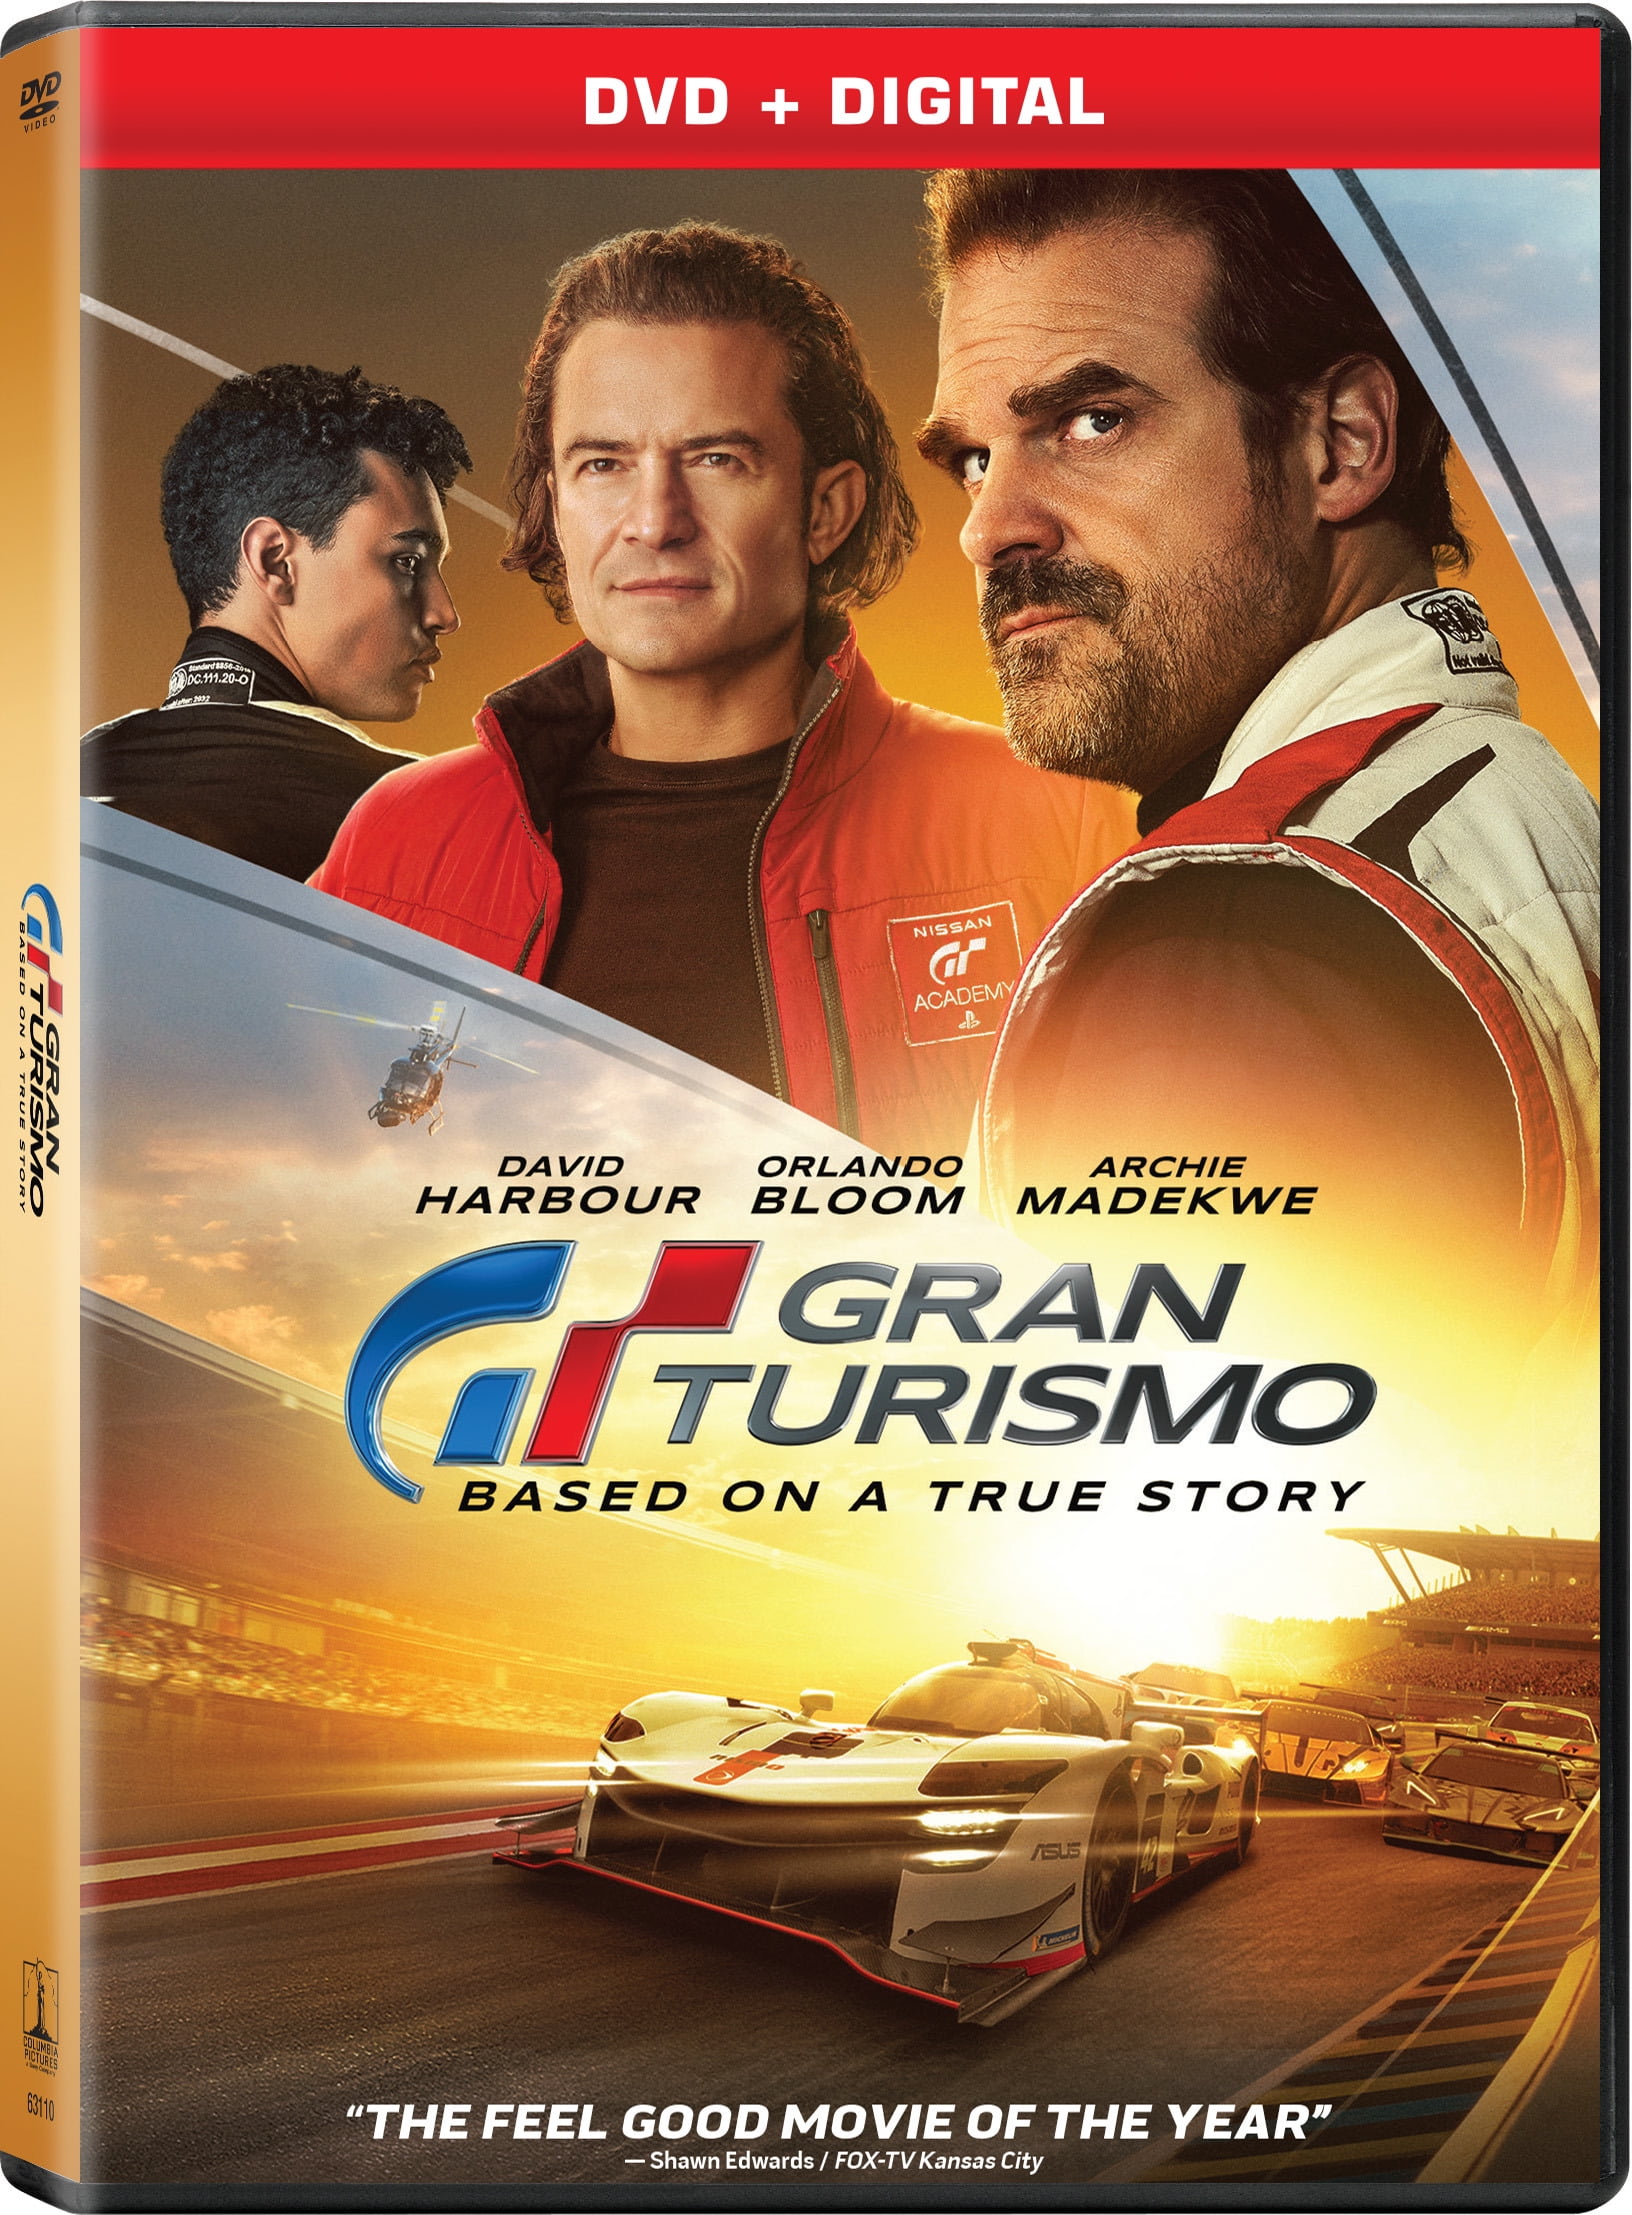 GRAN TURISMO - Official Trailer (HD) 